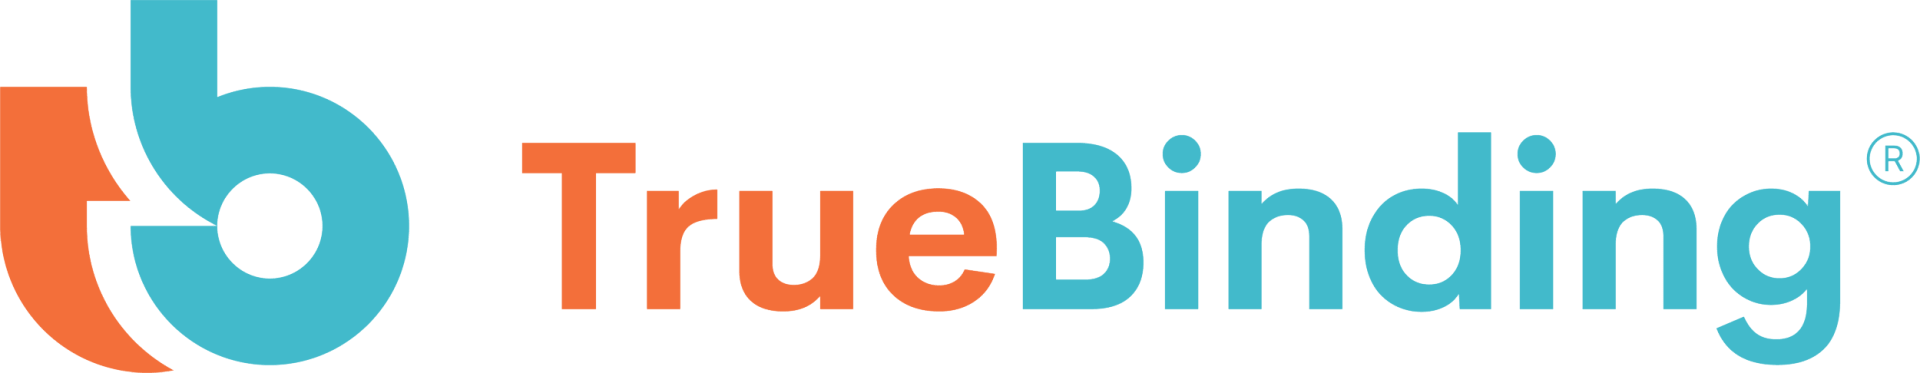 TrueBinding logo